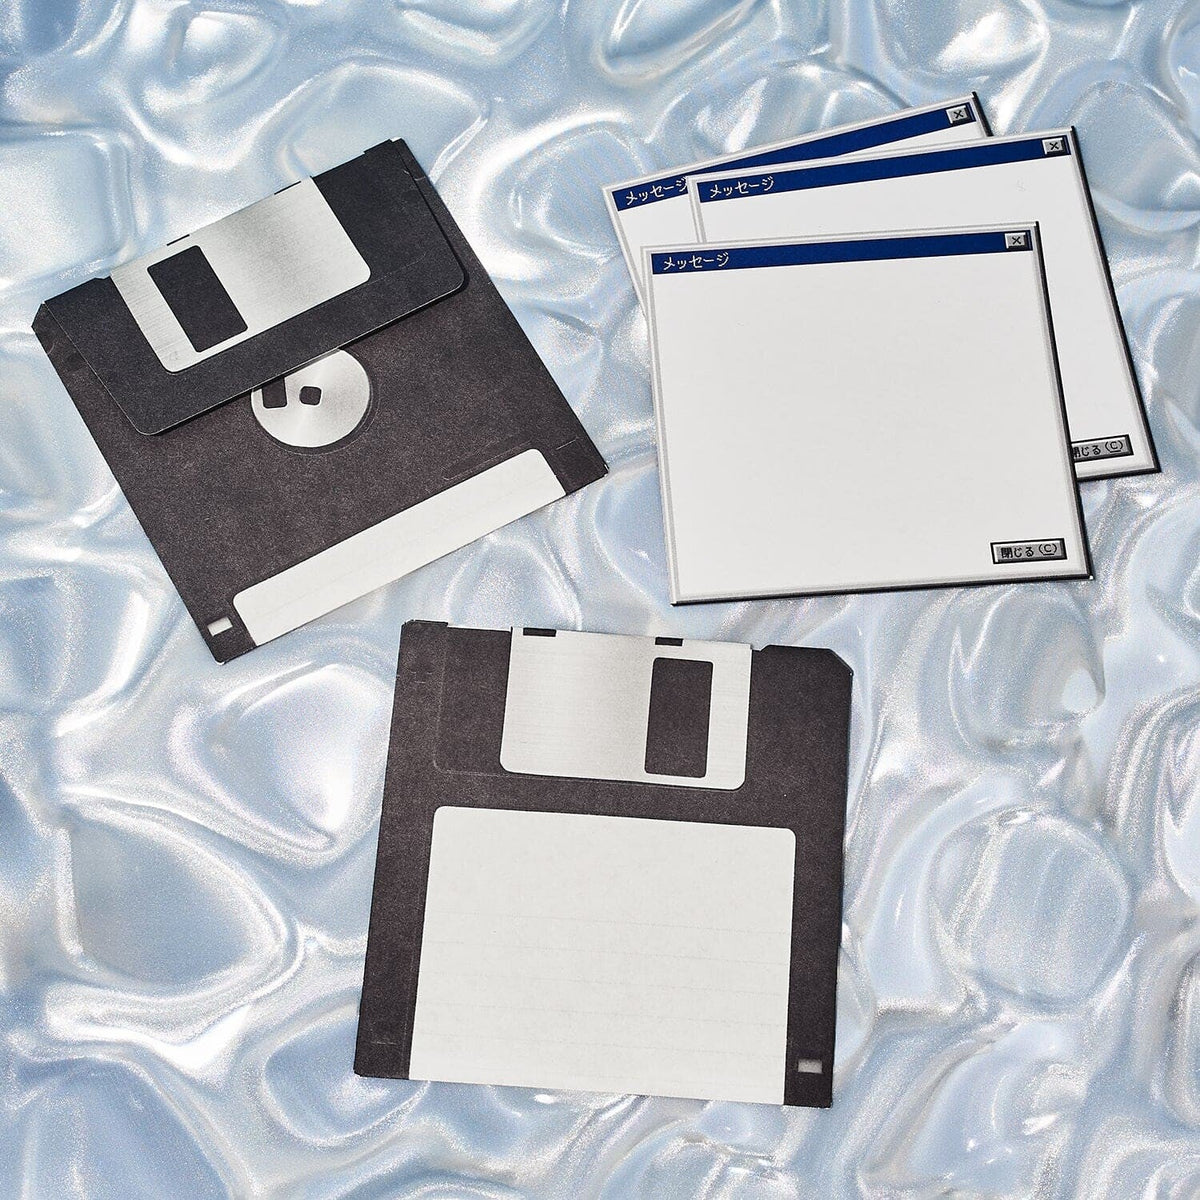 Japanese Greeting Card Set - Floppy Disk Boyfriend Gifts